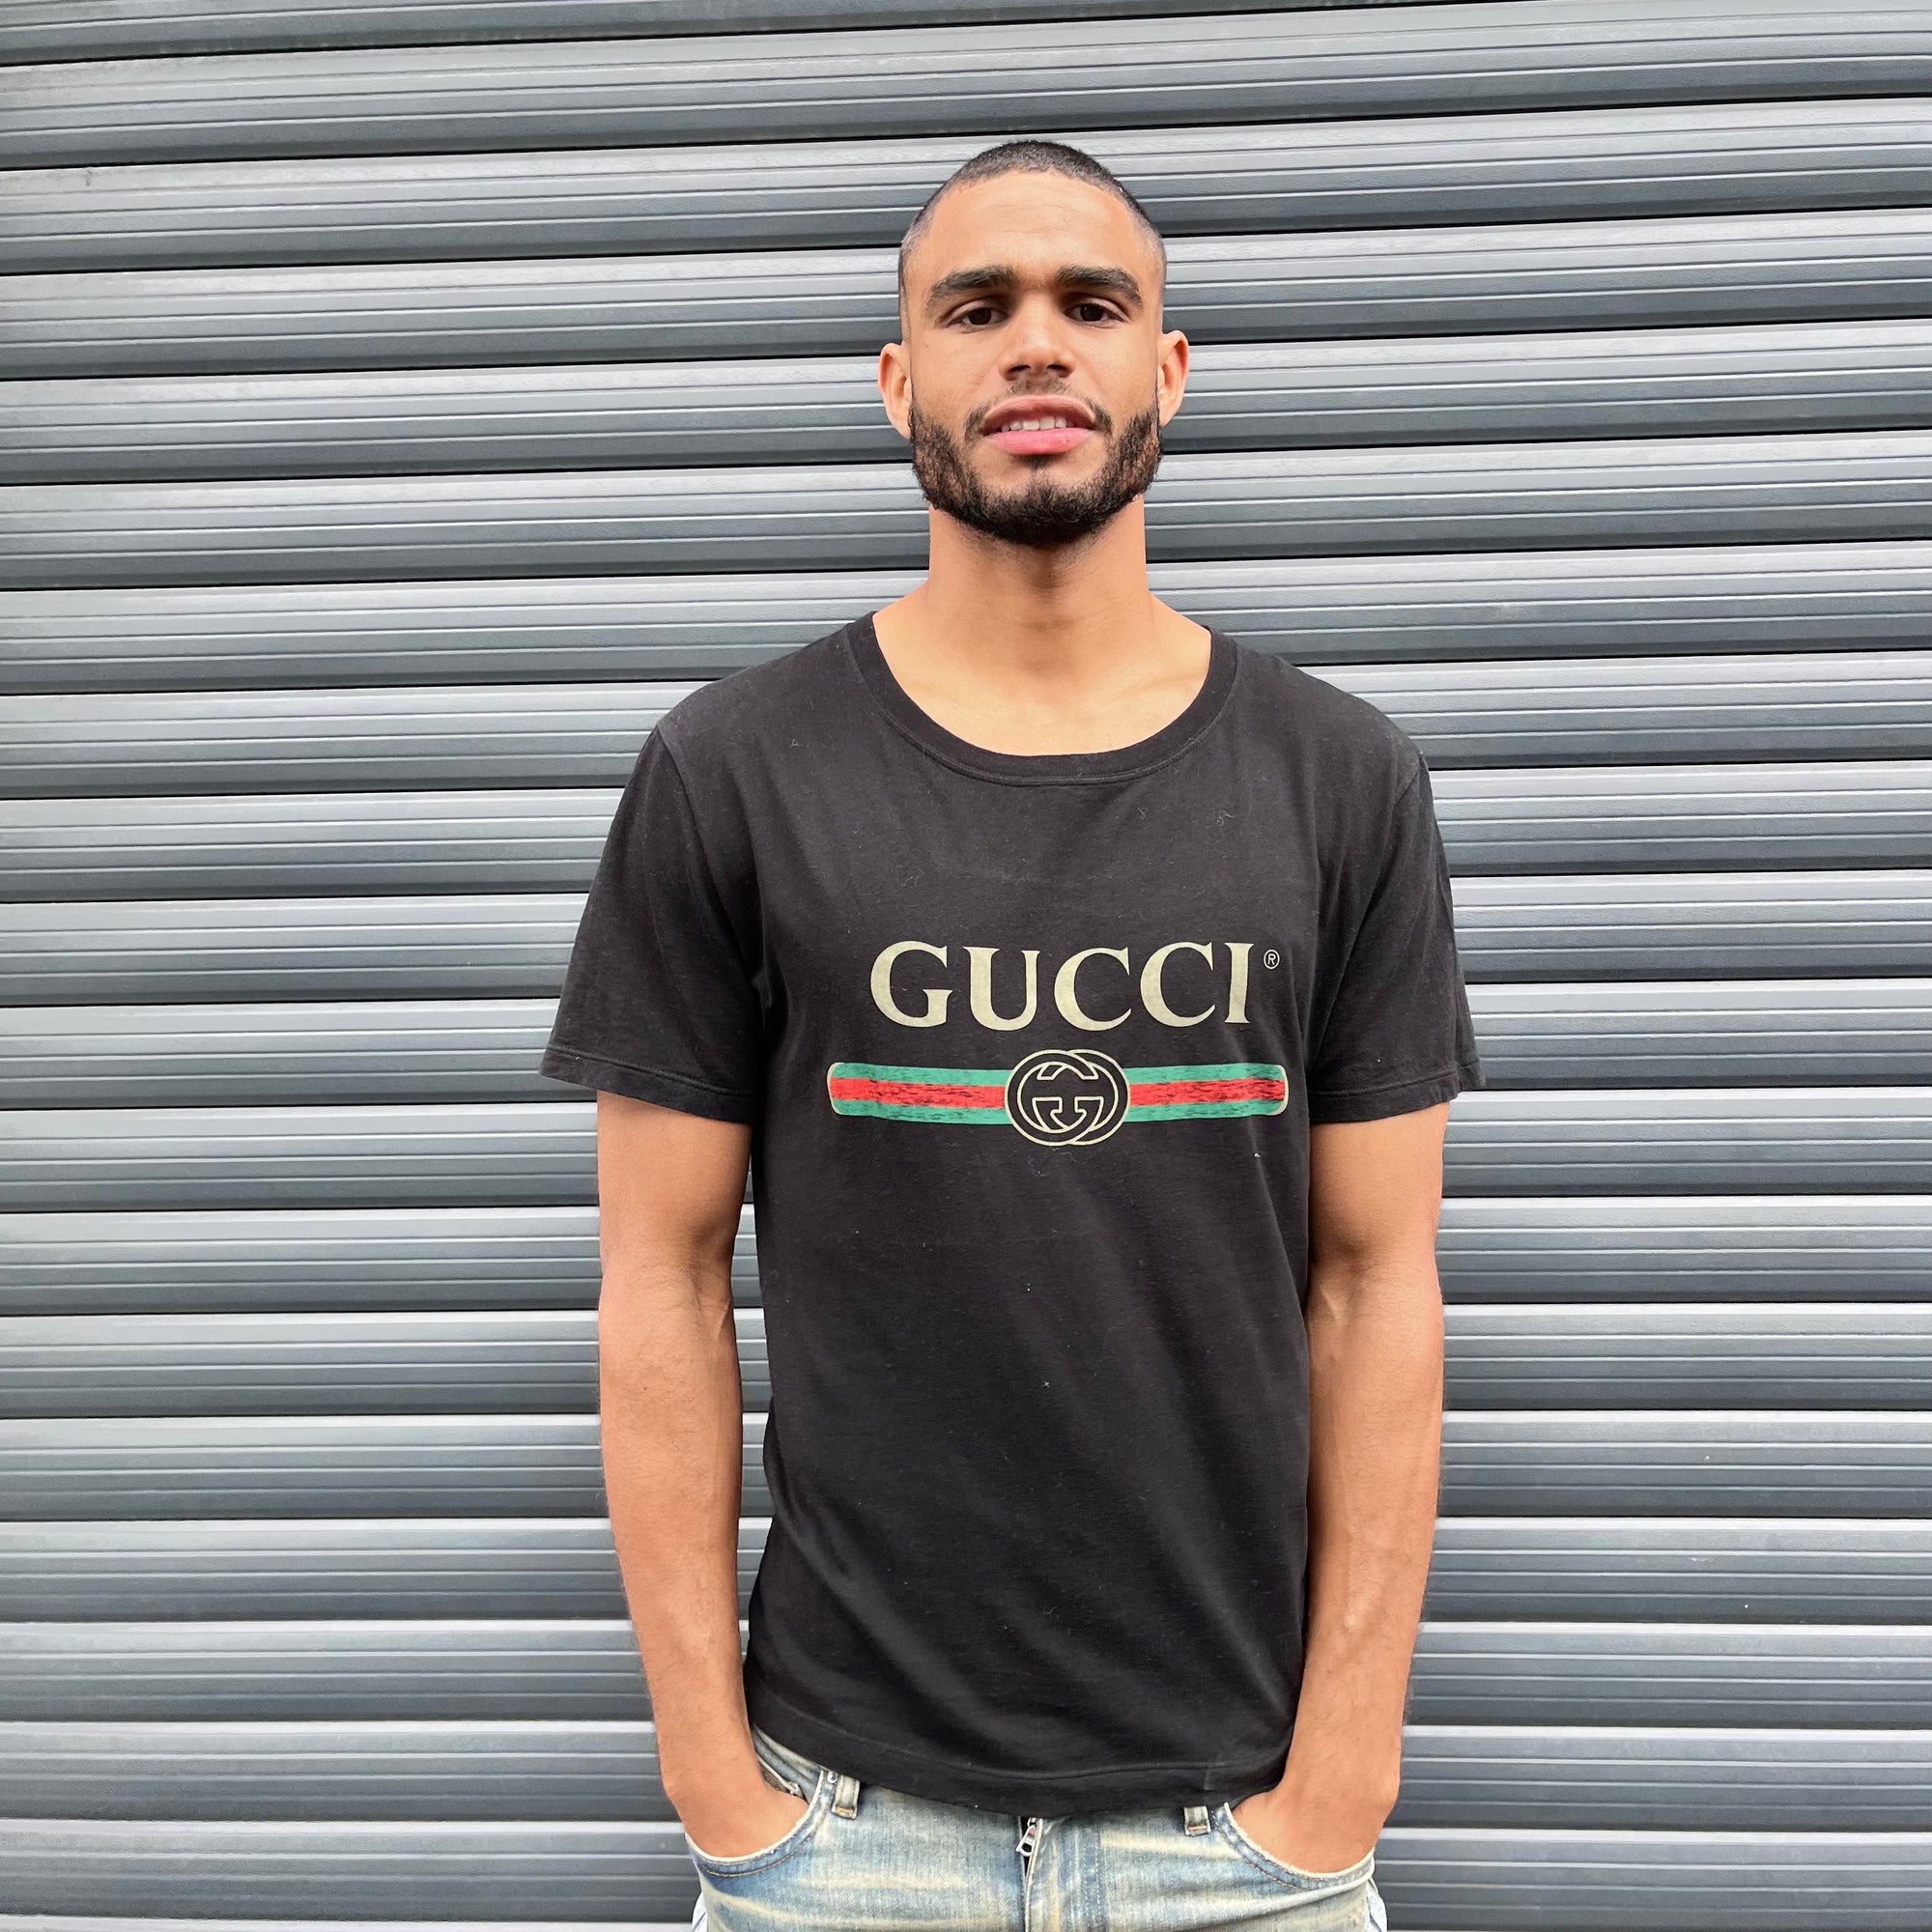 Gucci Black & Green Logo T-Shirt - Medium - Only Worn Once